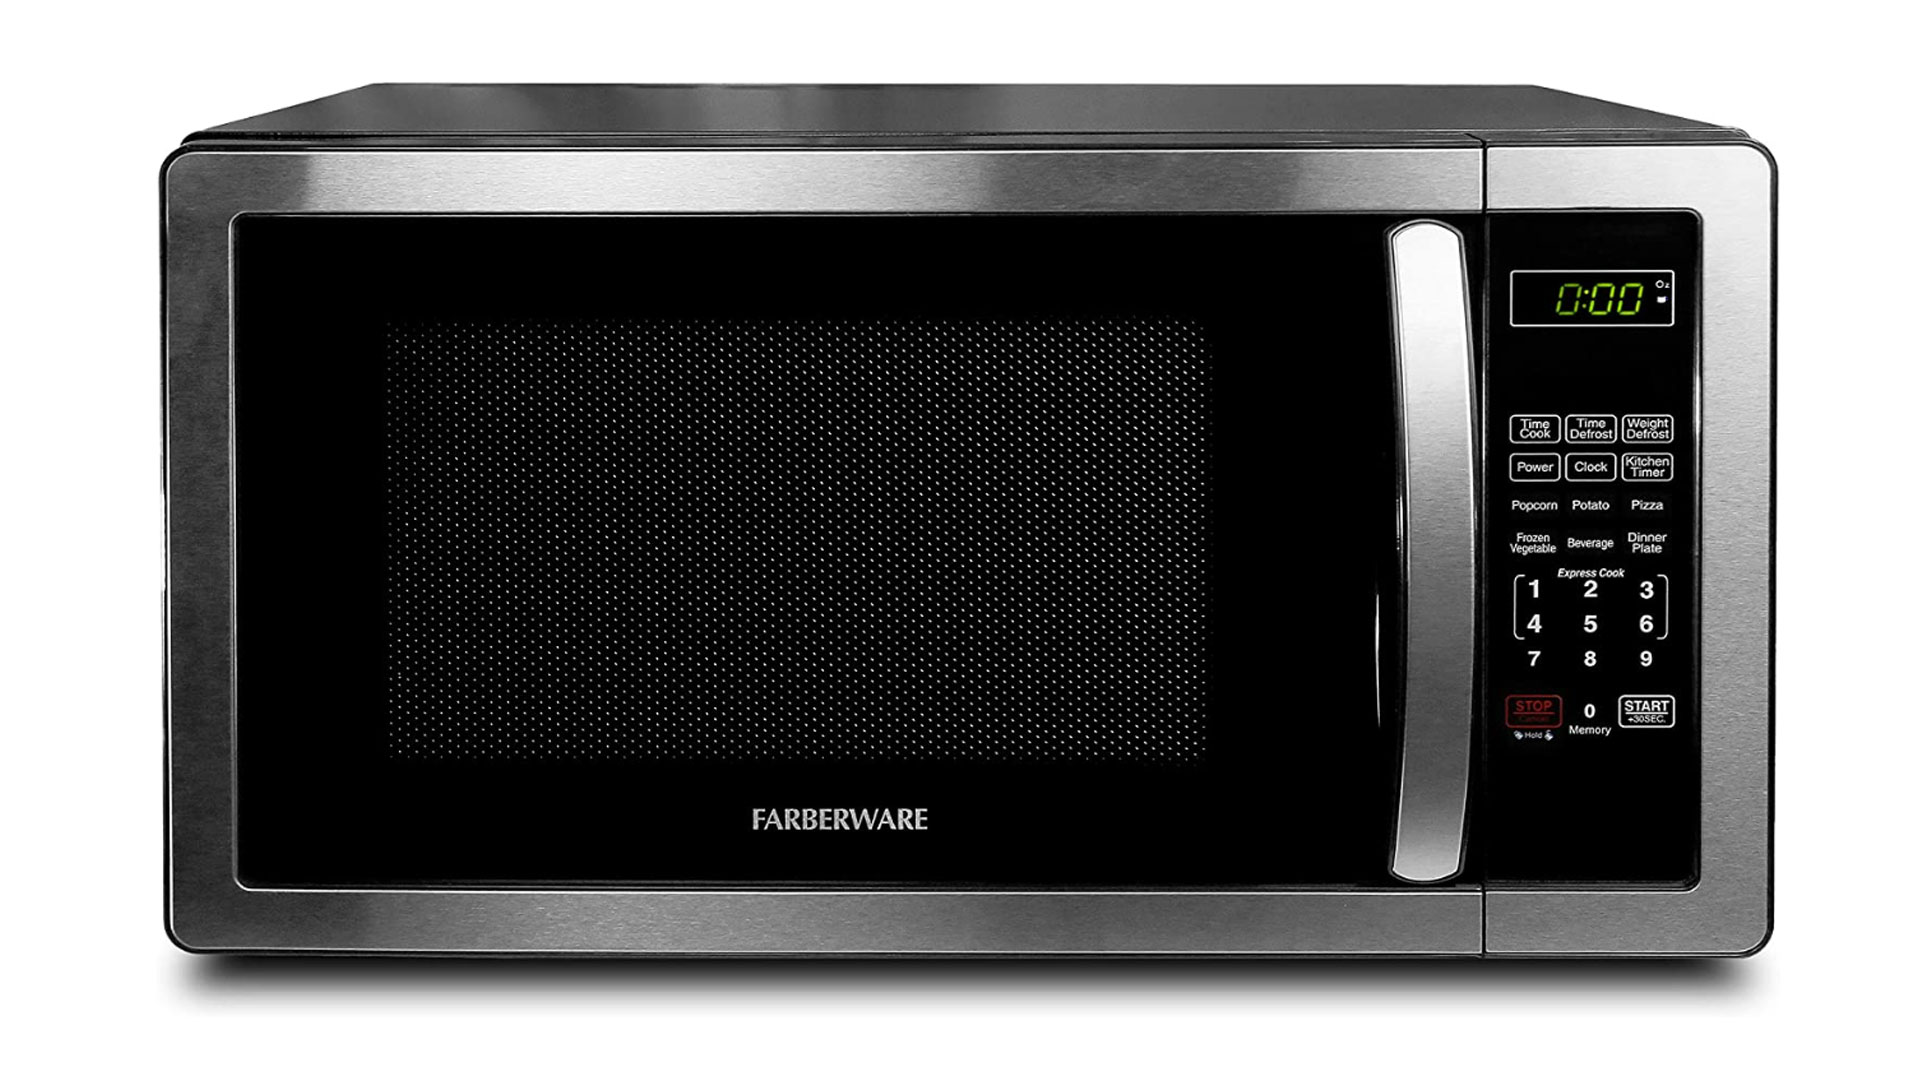 Faberware FMO11AHTBKB microwave